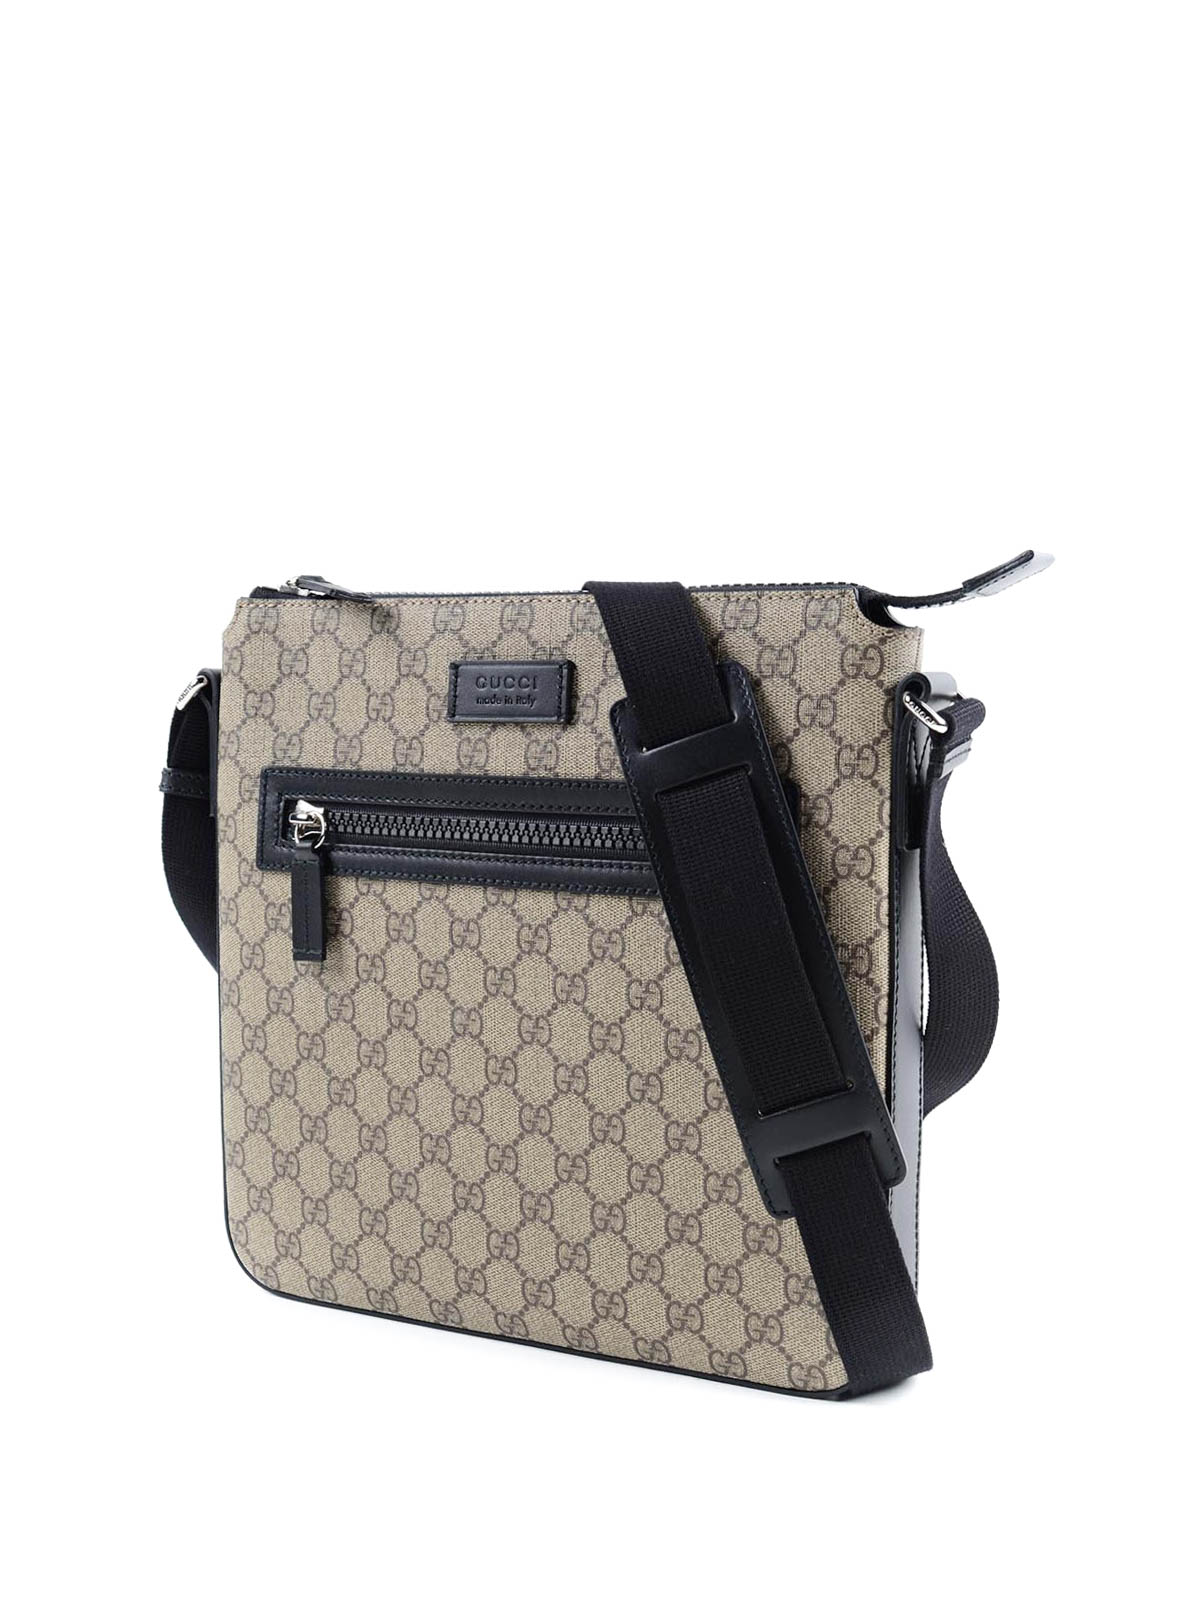 Gucci Gg Supreme Crossbody Bag | Paul Smith